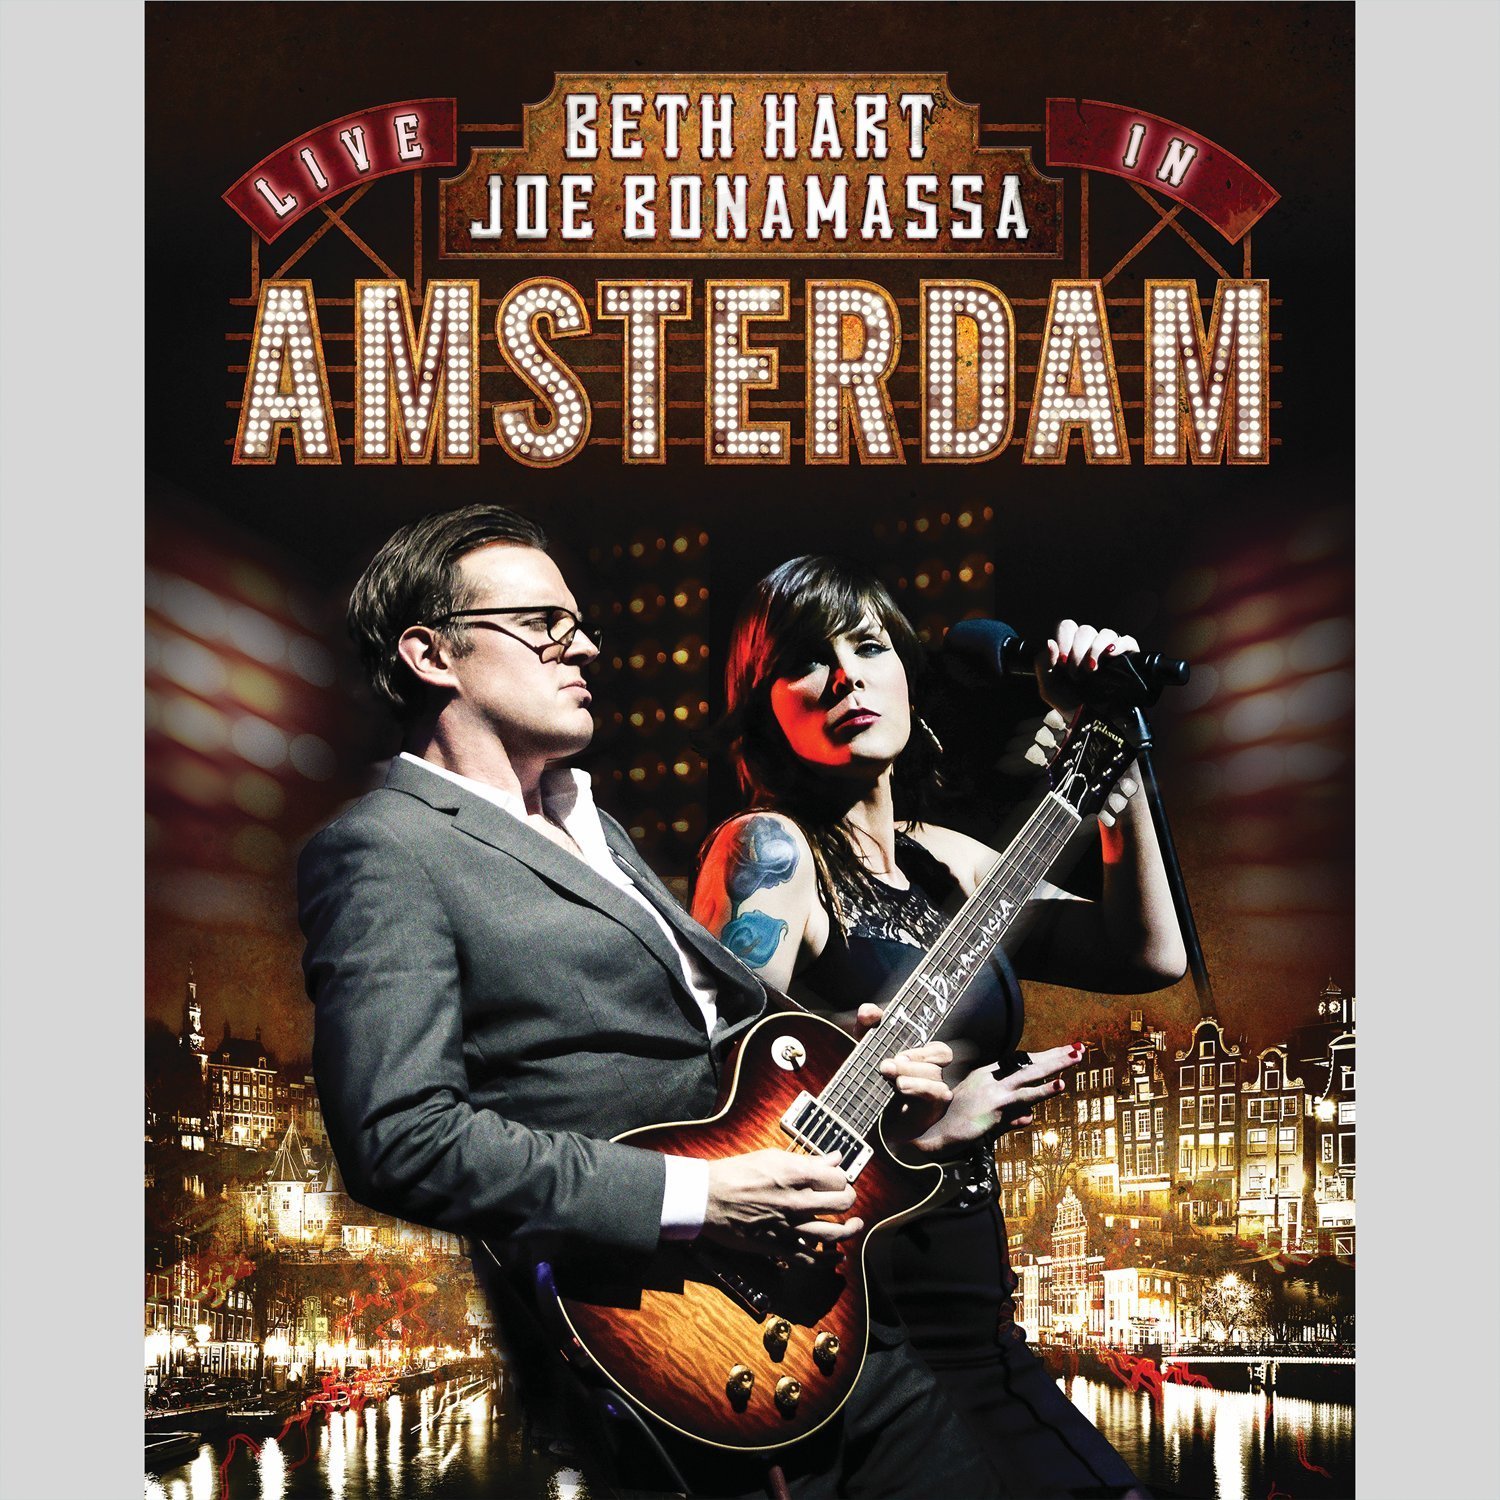 Beth Hart&Joe Bonamassa - Live in Amsterdam- Blu ray